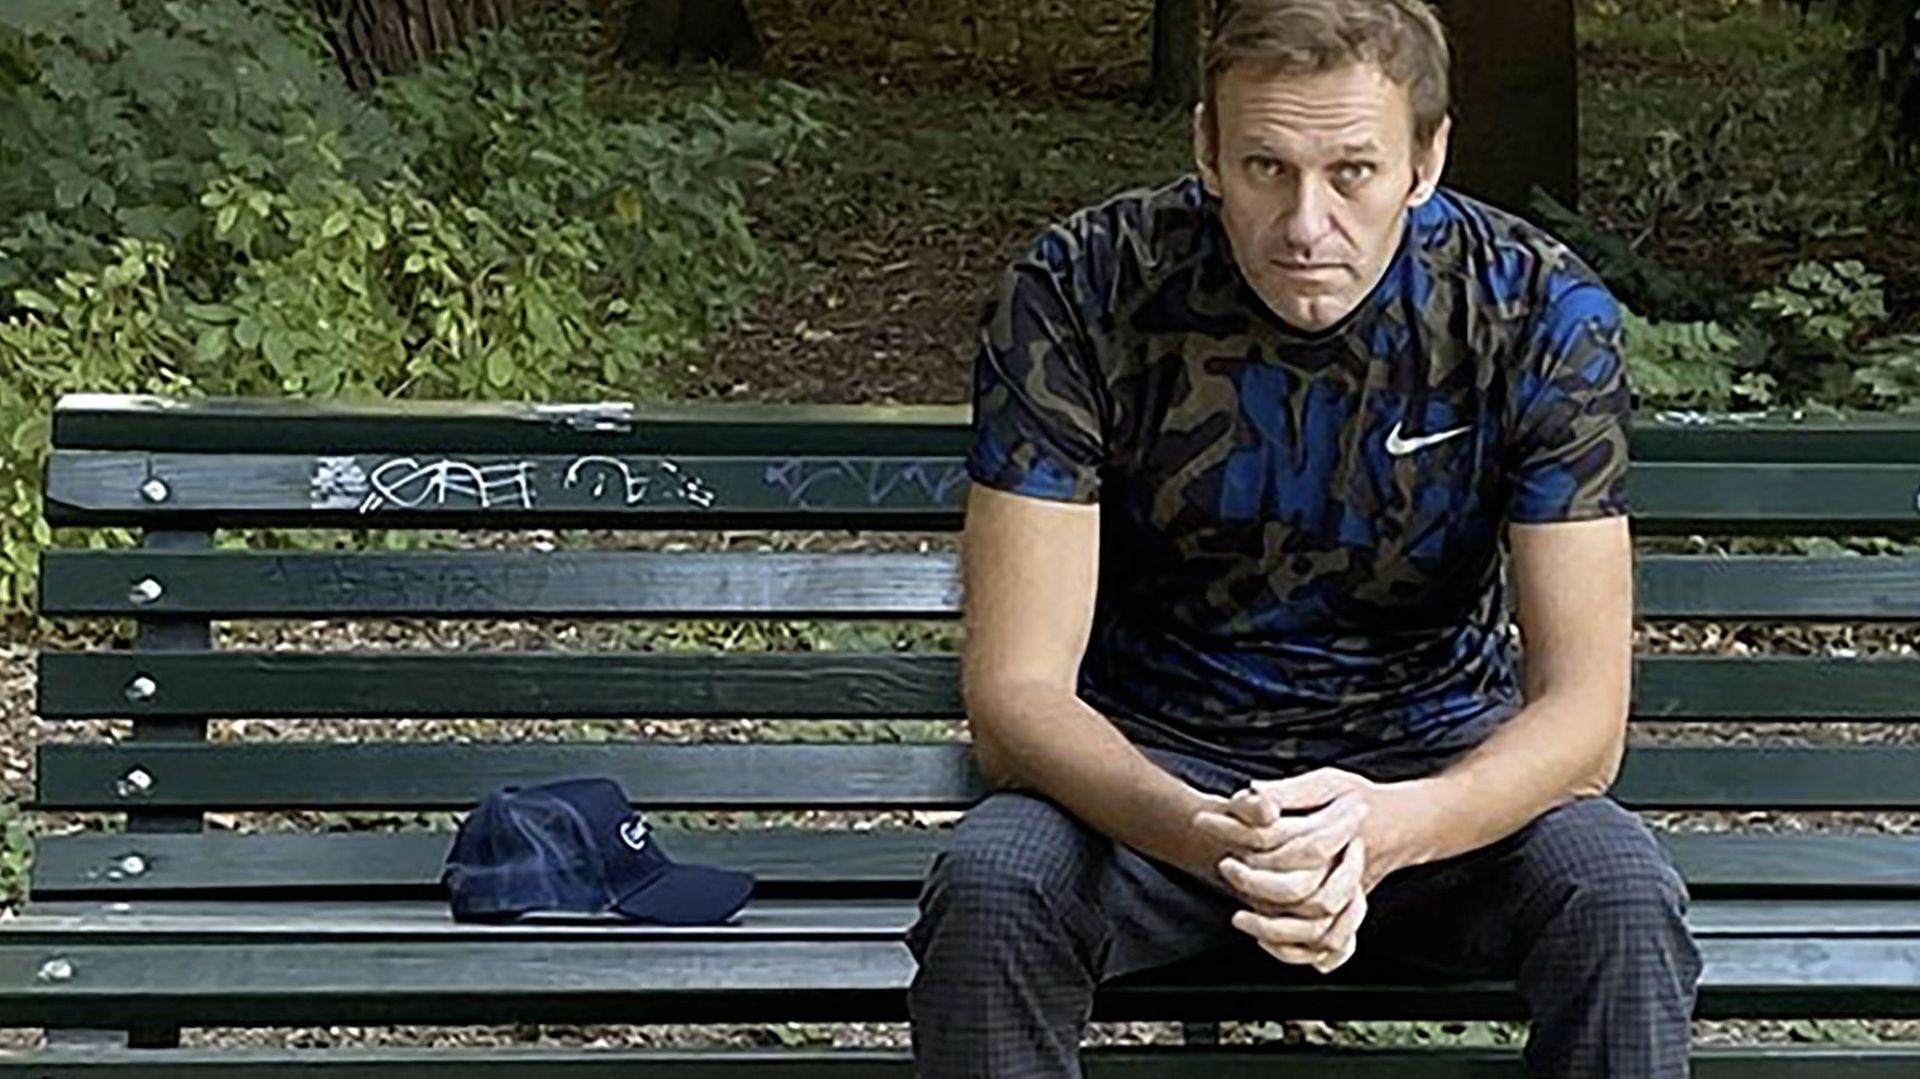 Empoisonnement de Navalny: "Le service de renseignement russe FSB voulait assassiner Navalny"